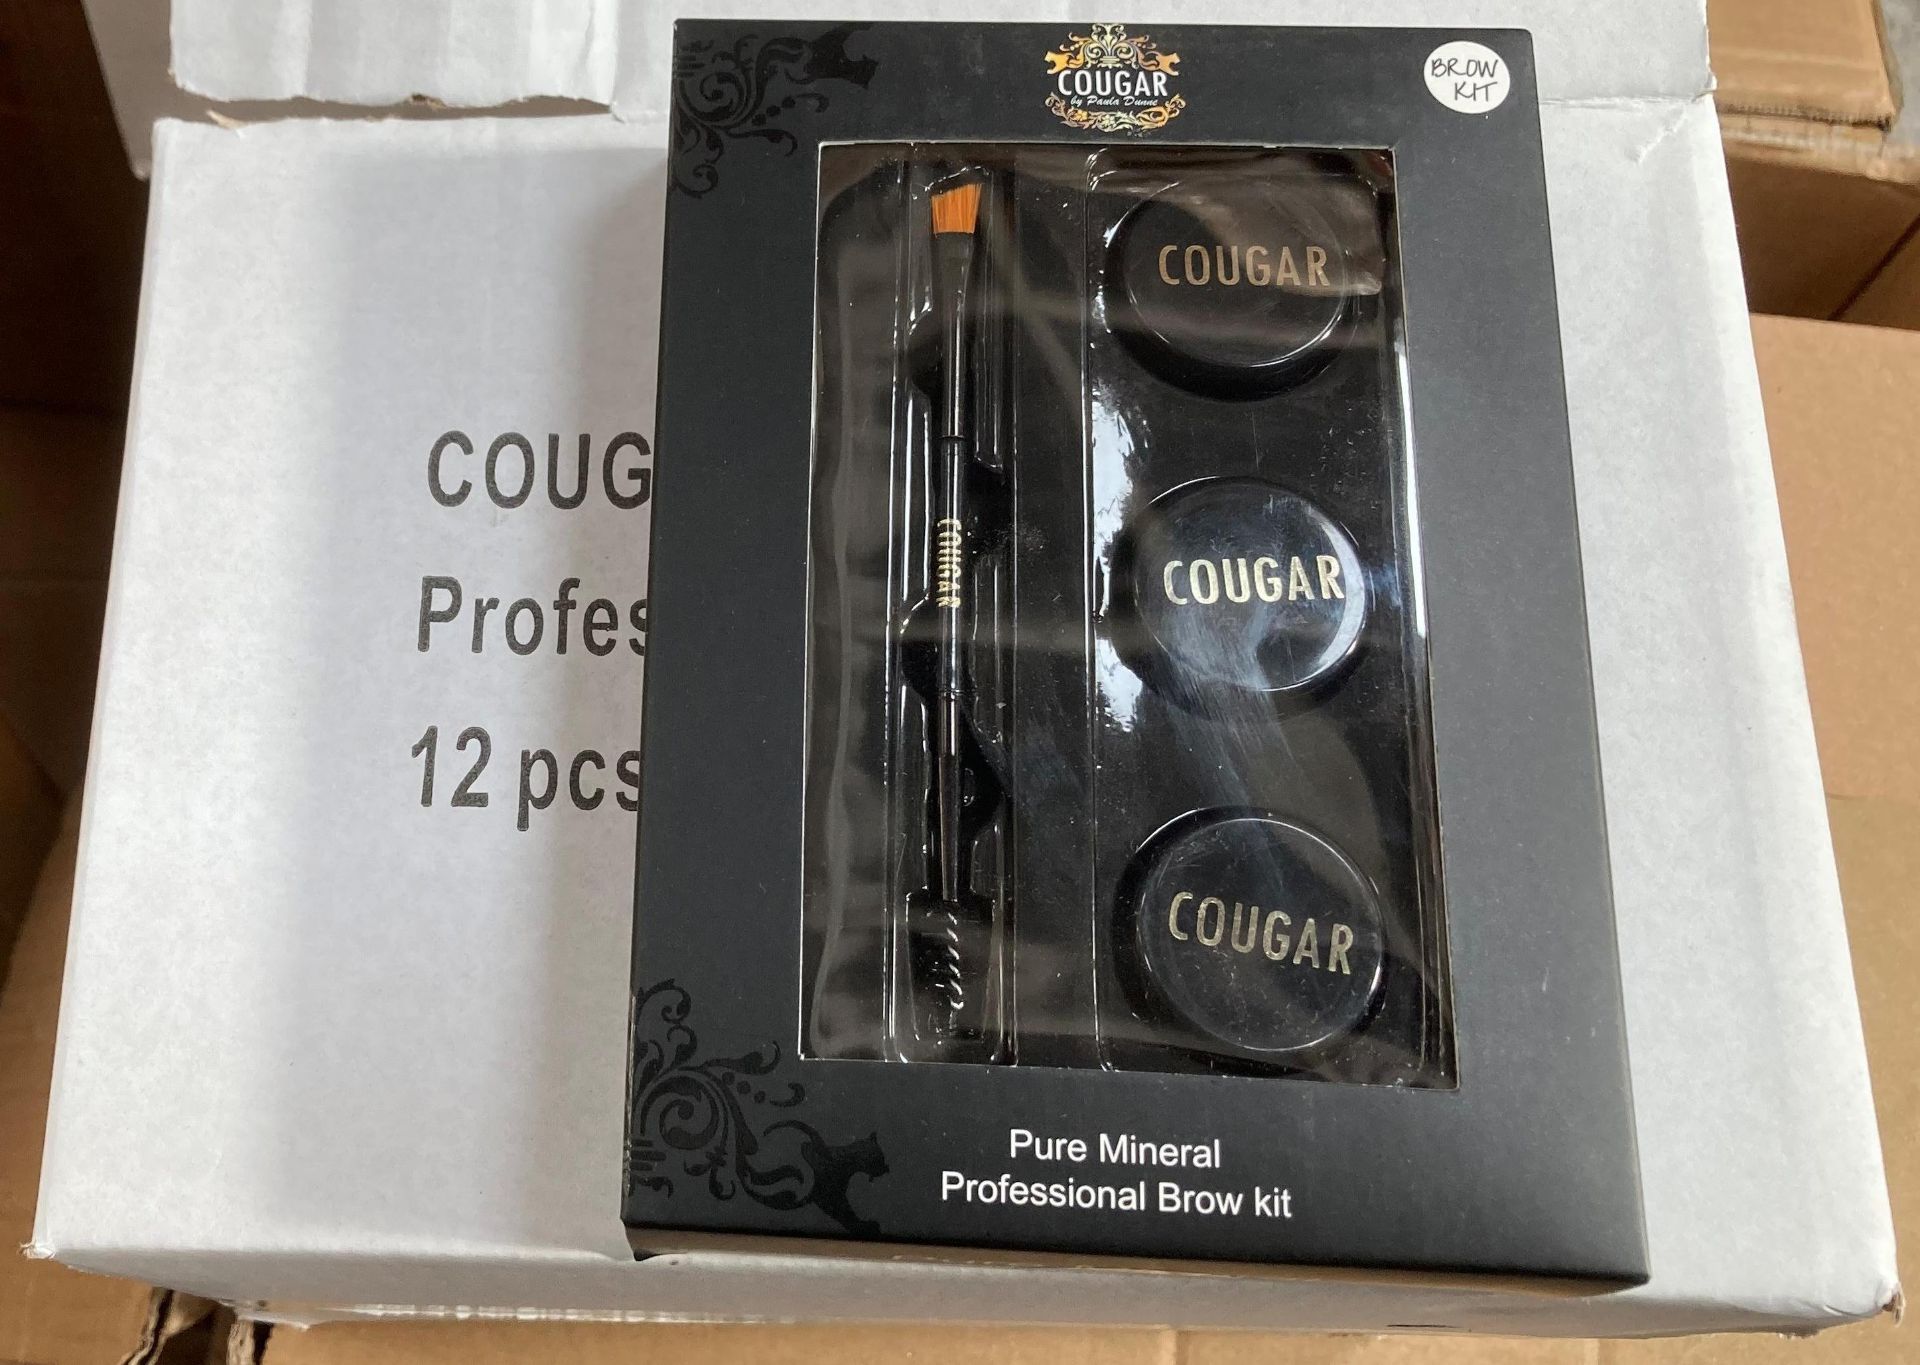 One box of Cougar Pure Mineral Professional Brow Kits (12 units per box)